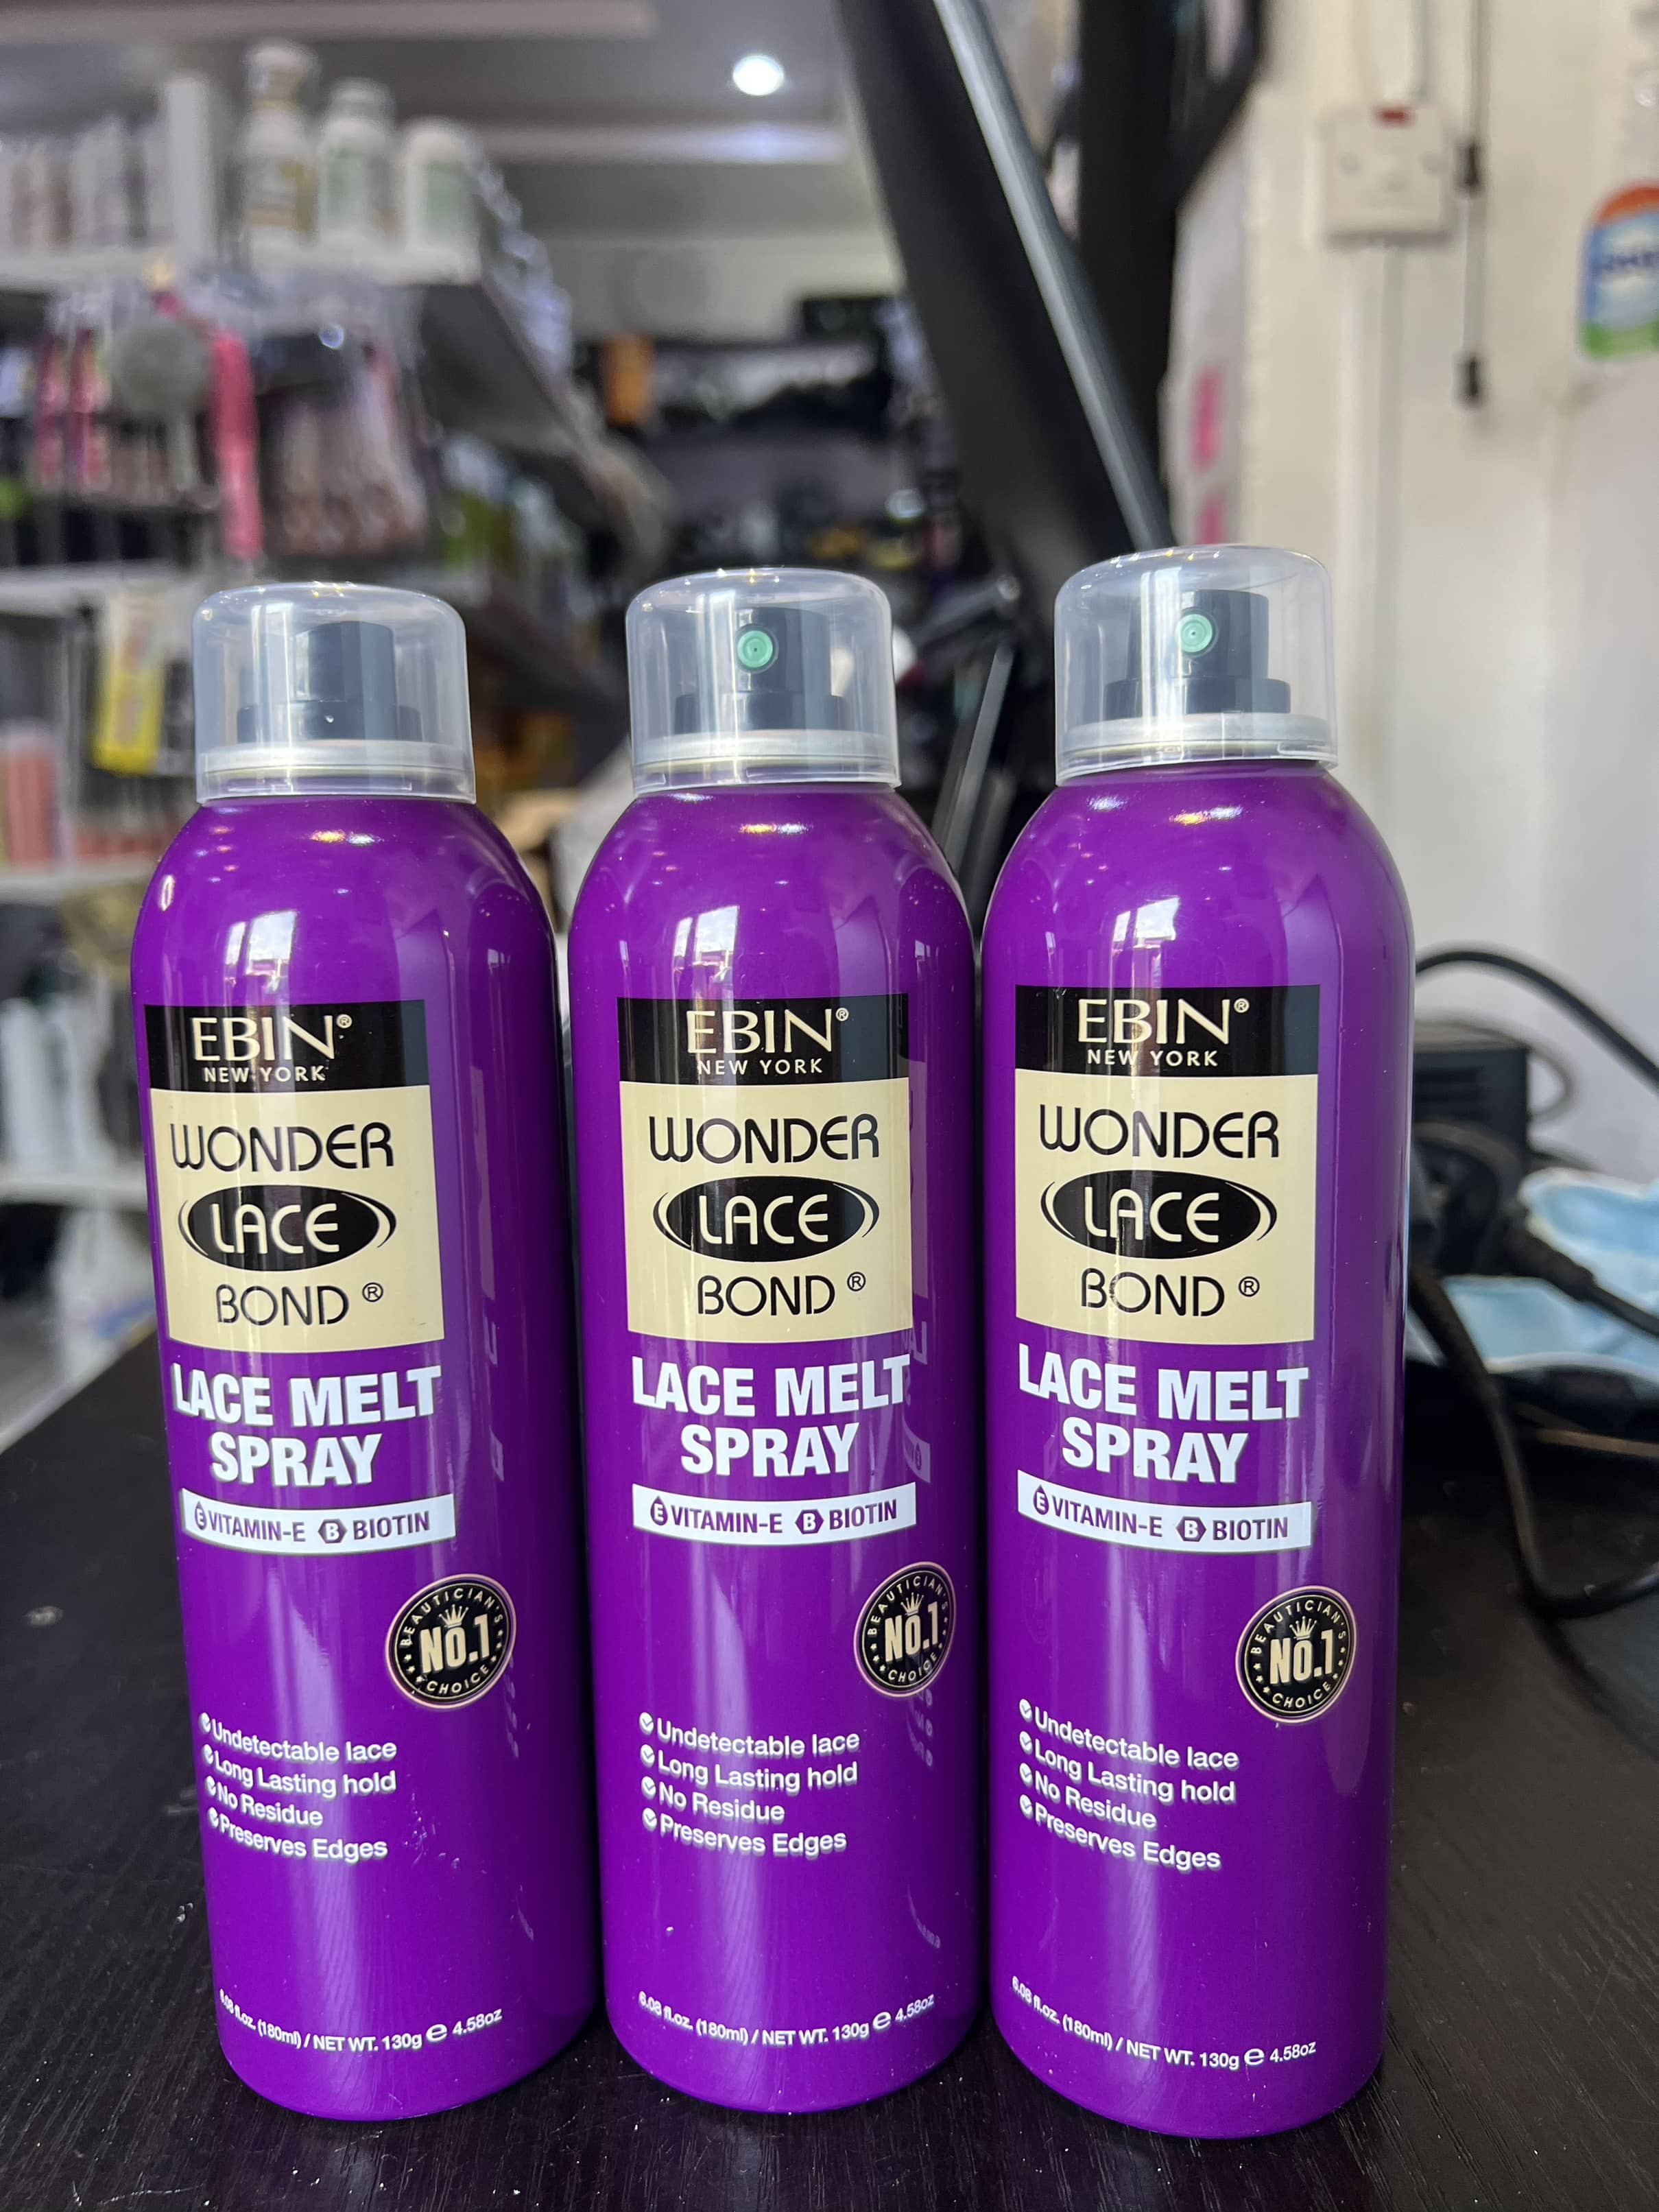 EBIN New York Lace Bond Lace Melt Spray with Keratin -130GM/4.58 OZ